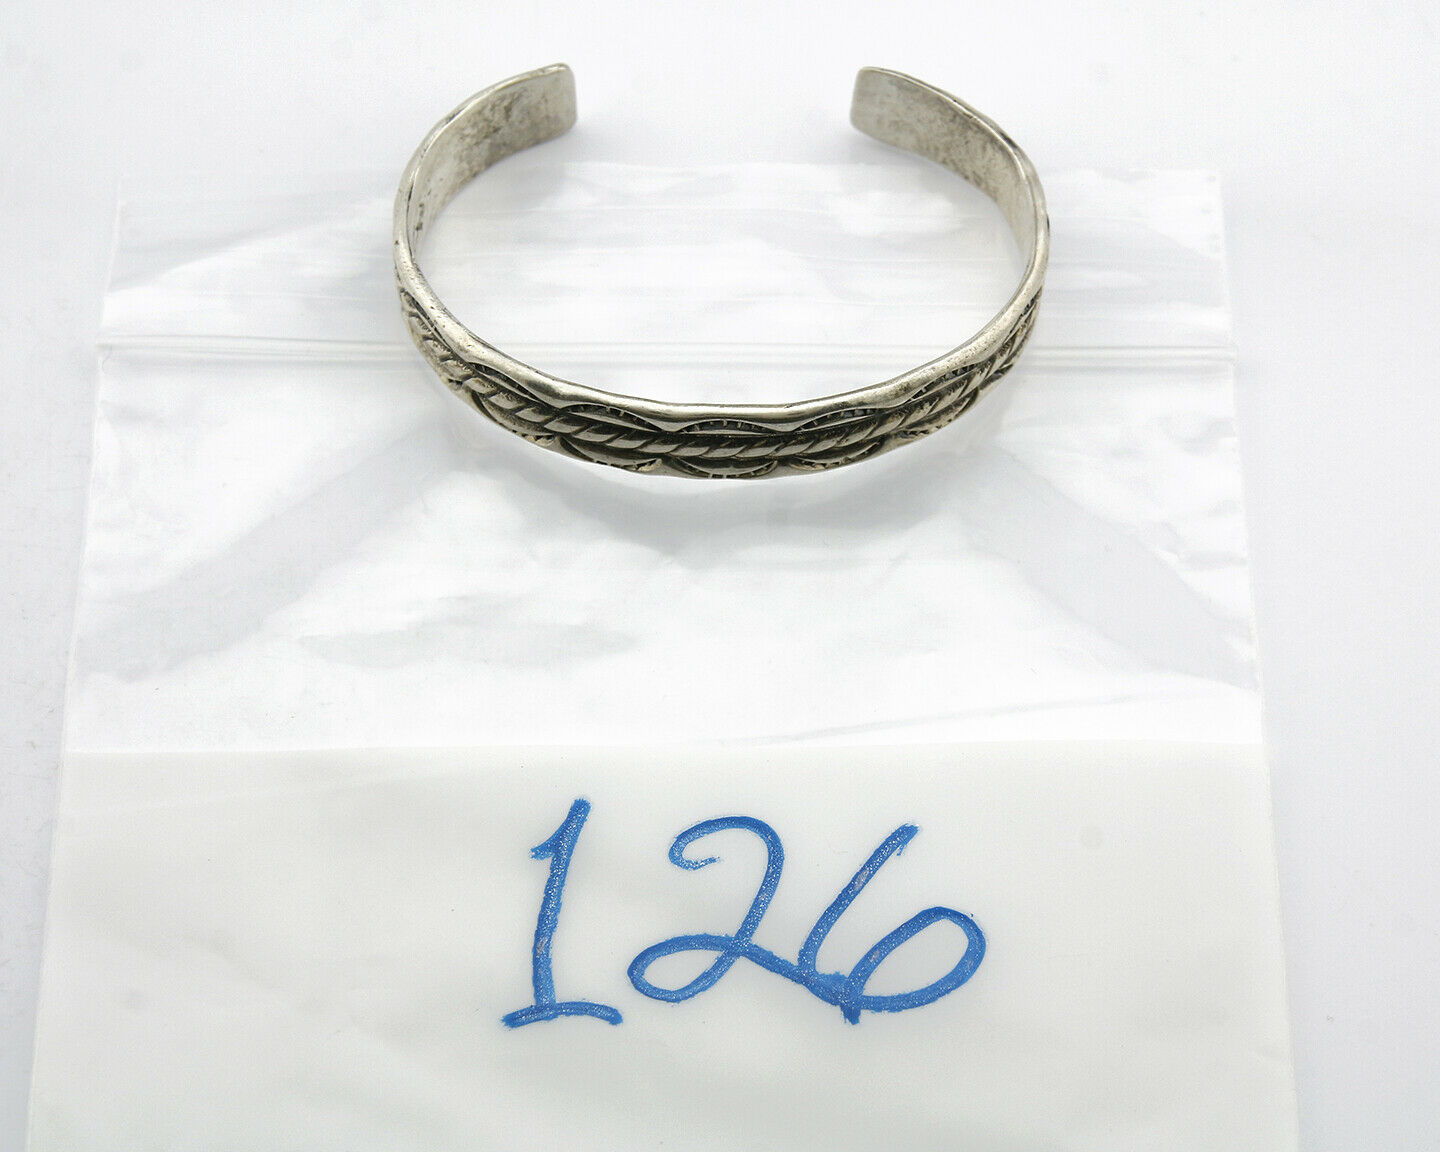 Navajo Bracelet .925 Silver Handmade Hand Stamped Signed Artist C Montoya C.80's